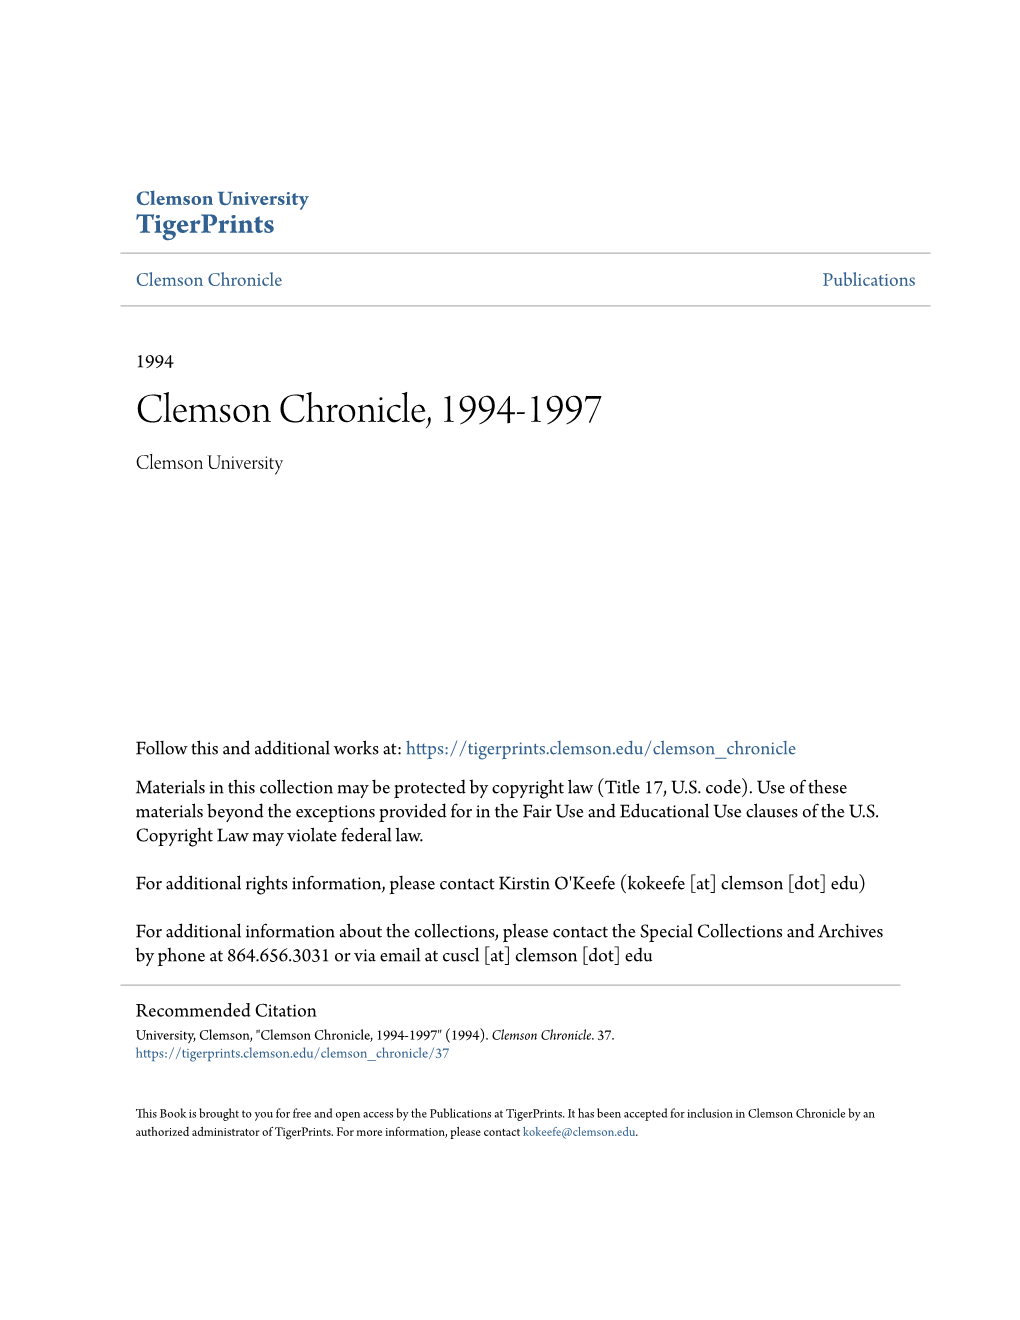 Clemson Chronicle, 1994-1997 Clemson University